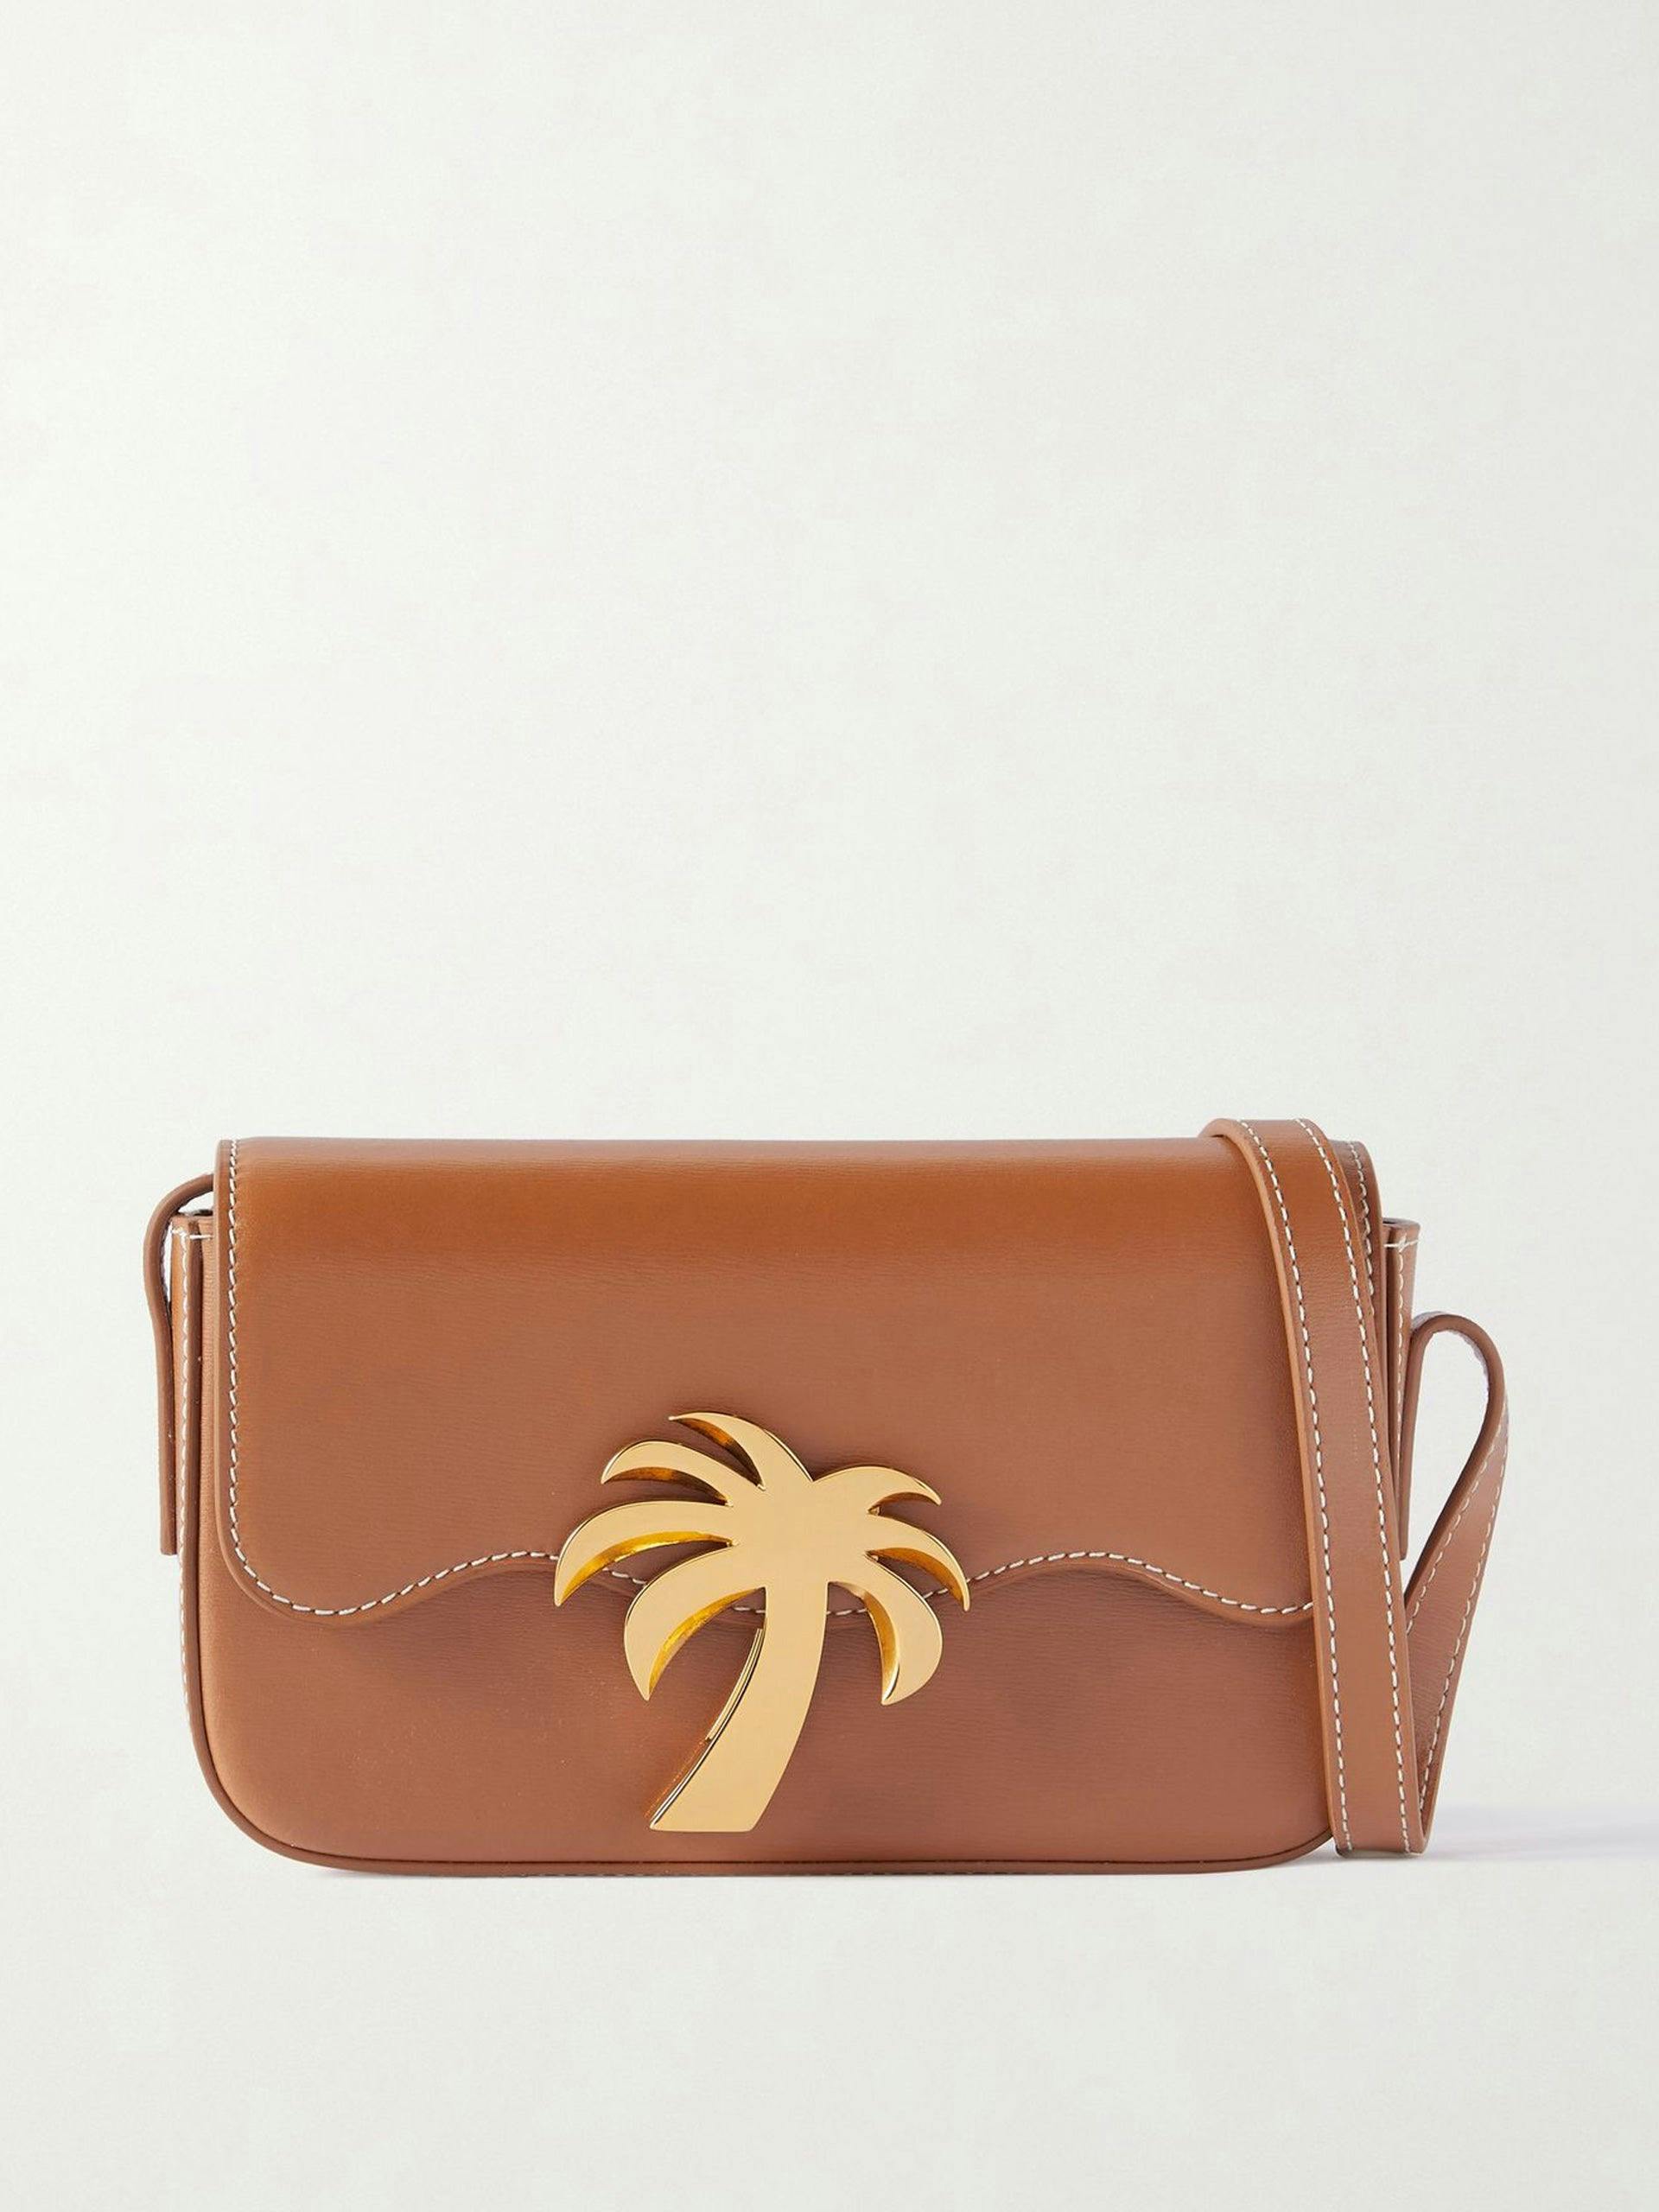 Palm Beach brown leather shoulder bag